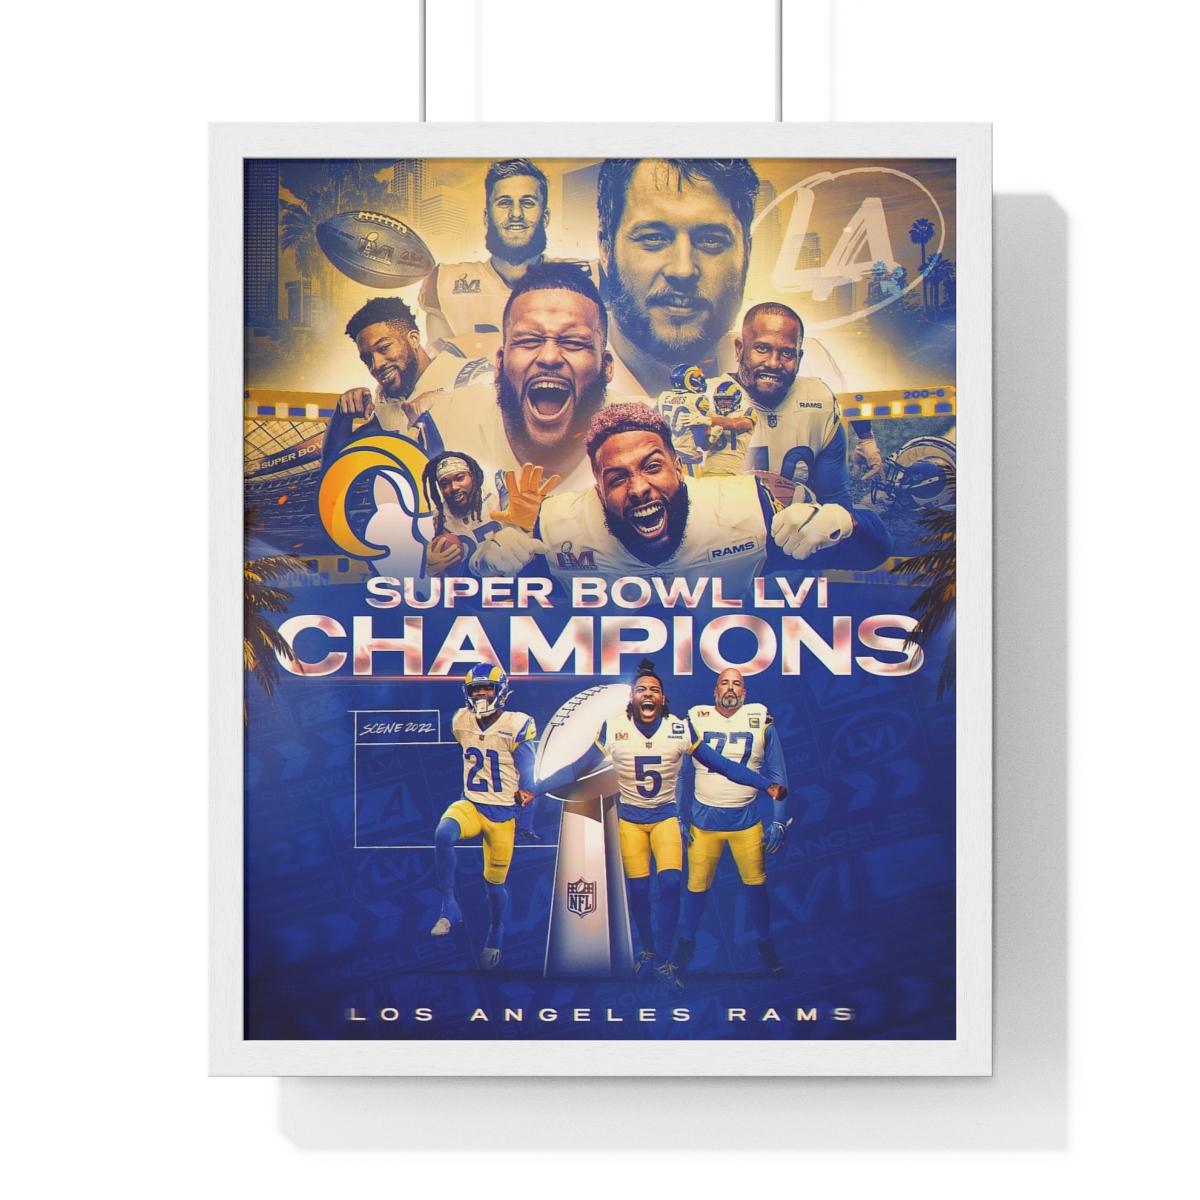 Los Angeles Rams Super Bowl LVI Champions Wall Decor Poster Canvas